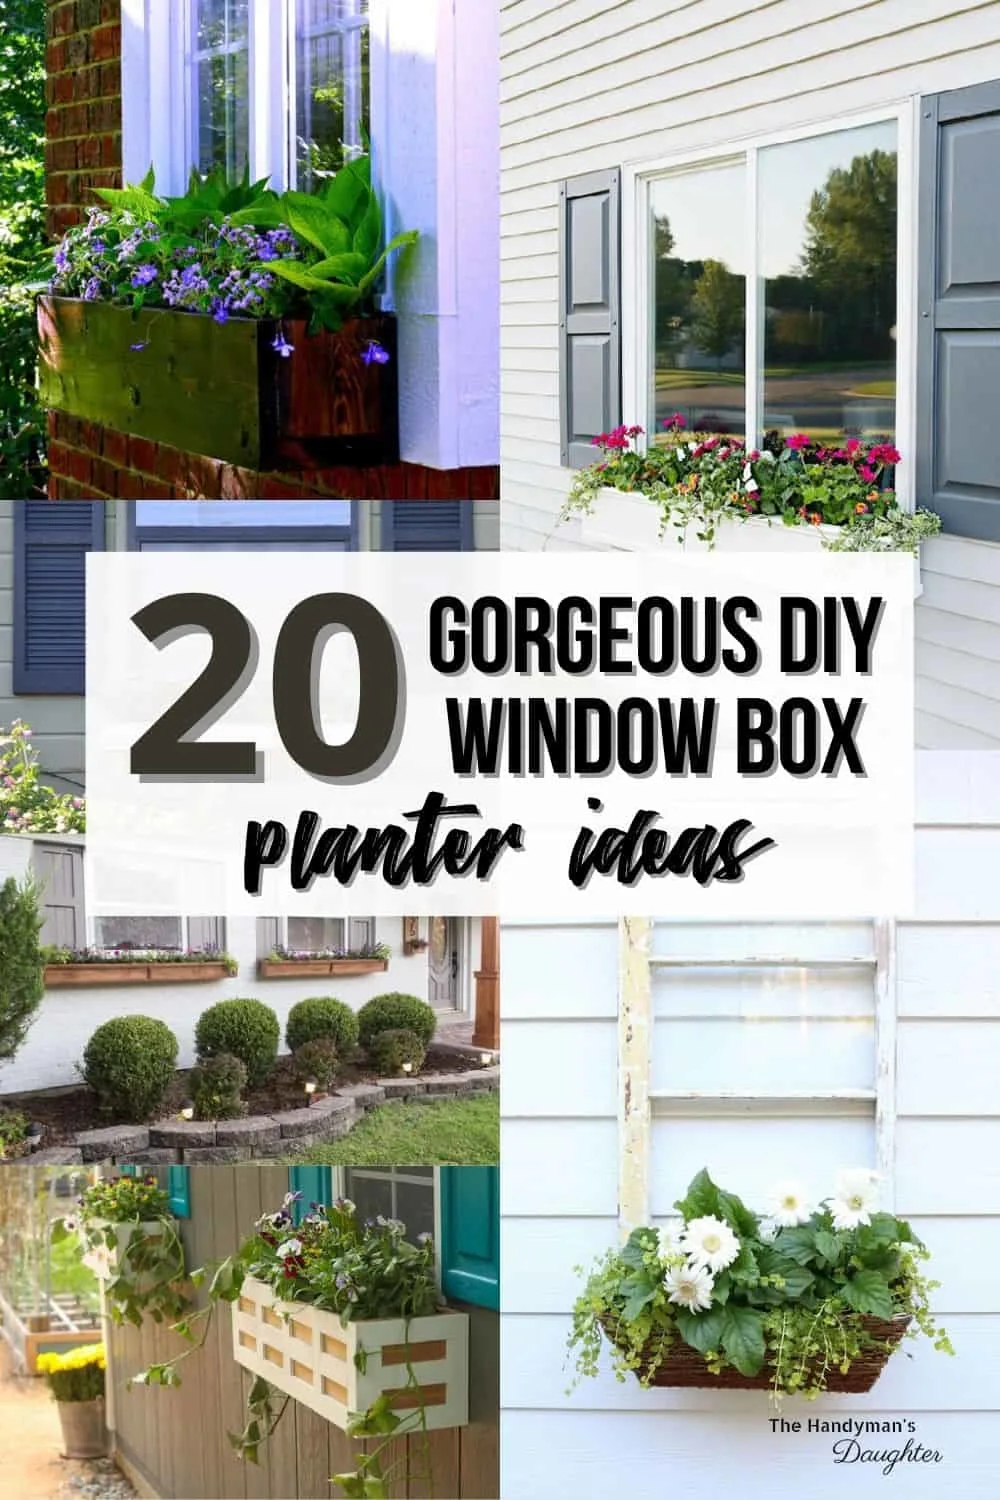  Gorgeous Diy Window Box Planter Ideas The Handyman S Daughter - Front Of House Planter Box Ideas